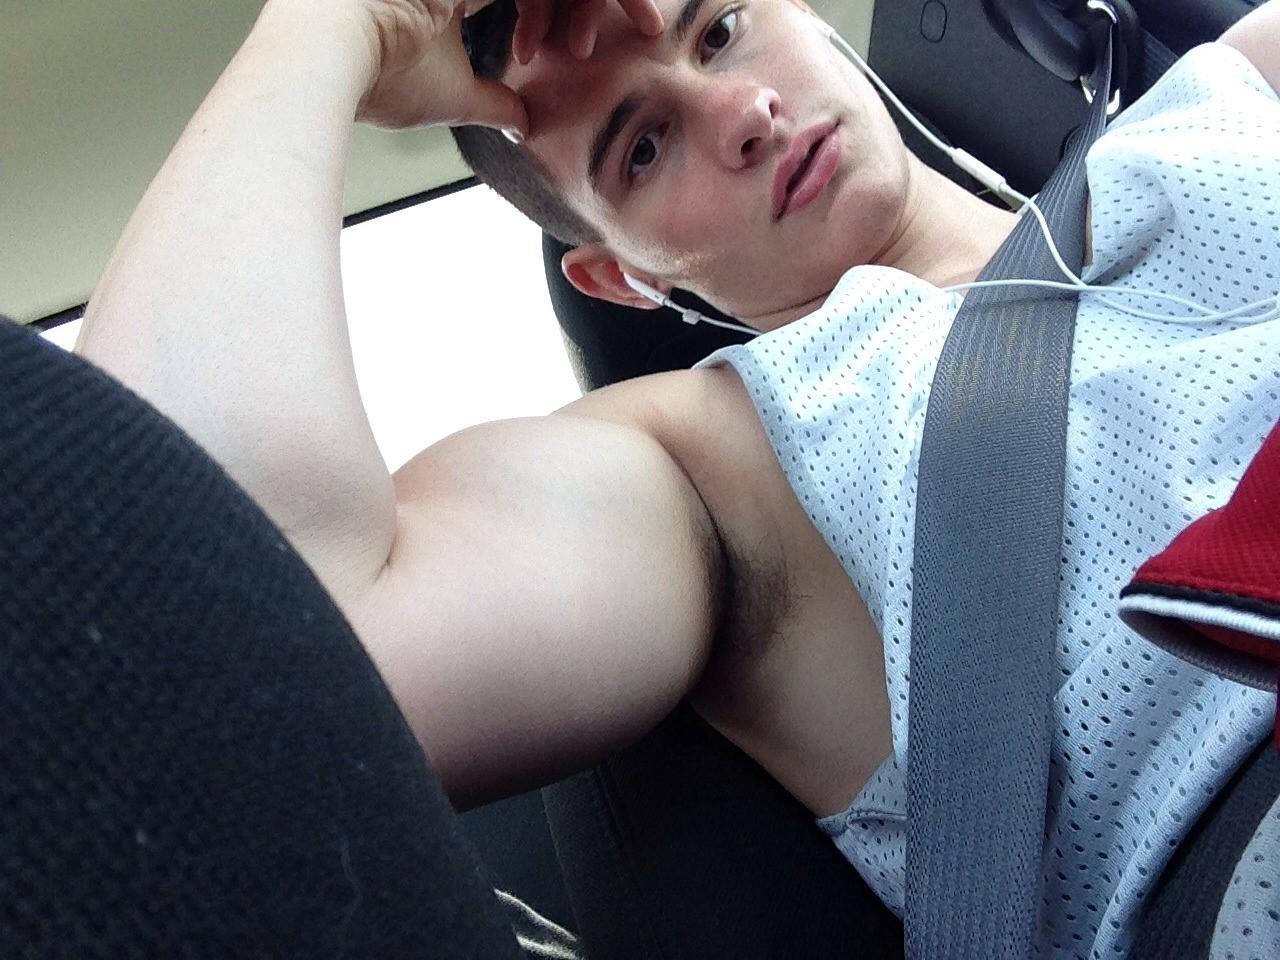 cocky-straight-dominant-bad-boys-college-teen-armpit-big-biceps-flex-bro-car-selfie